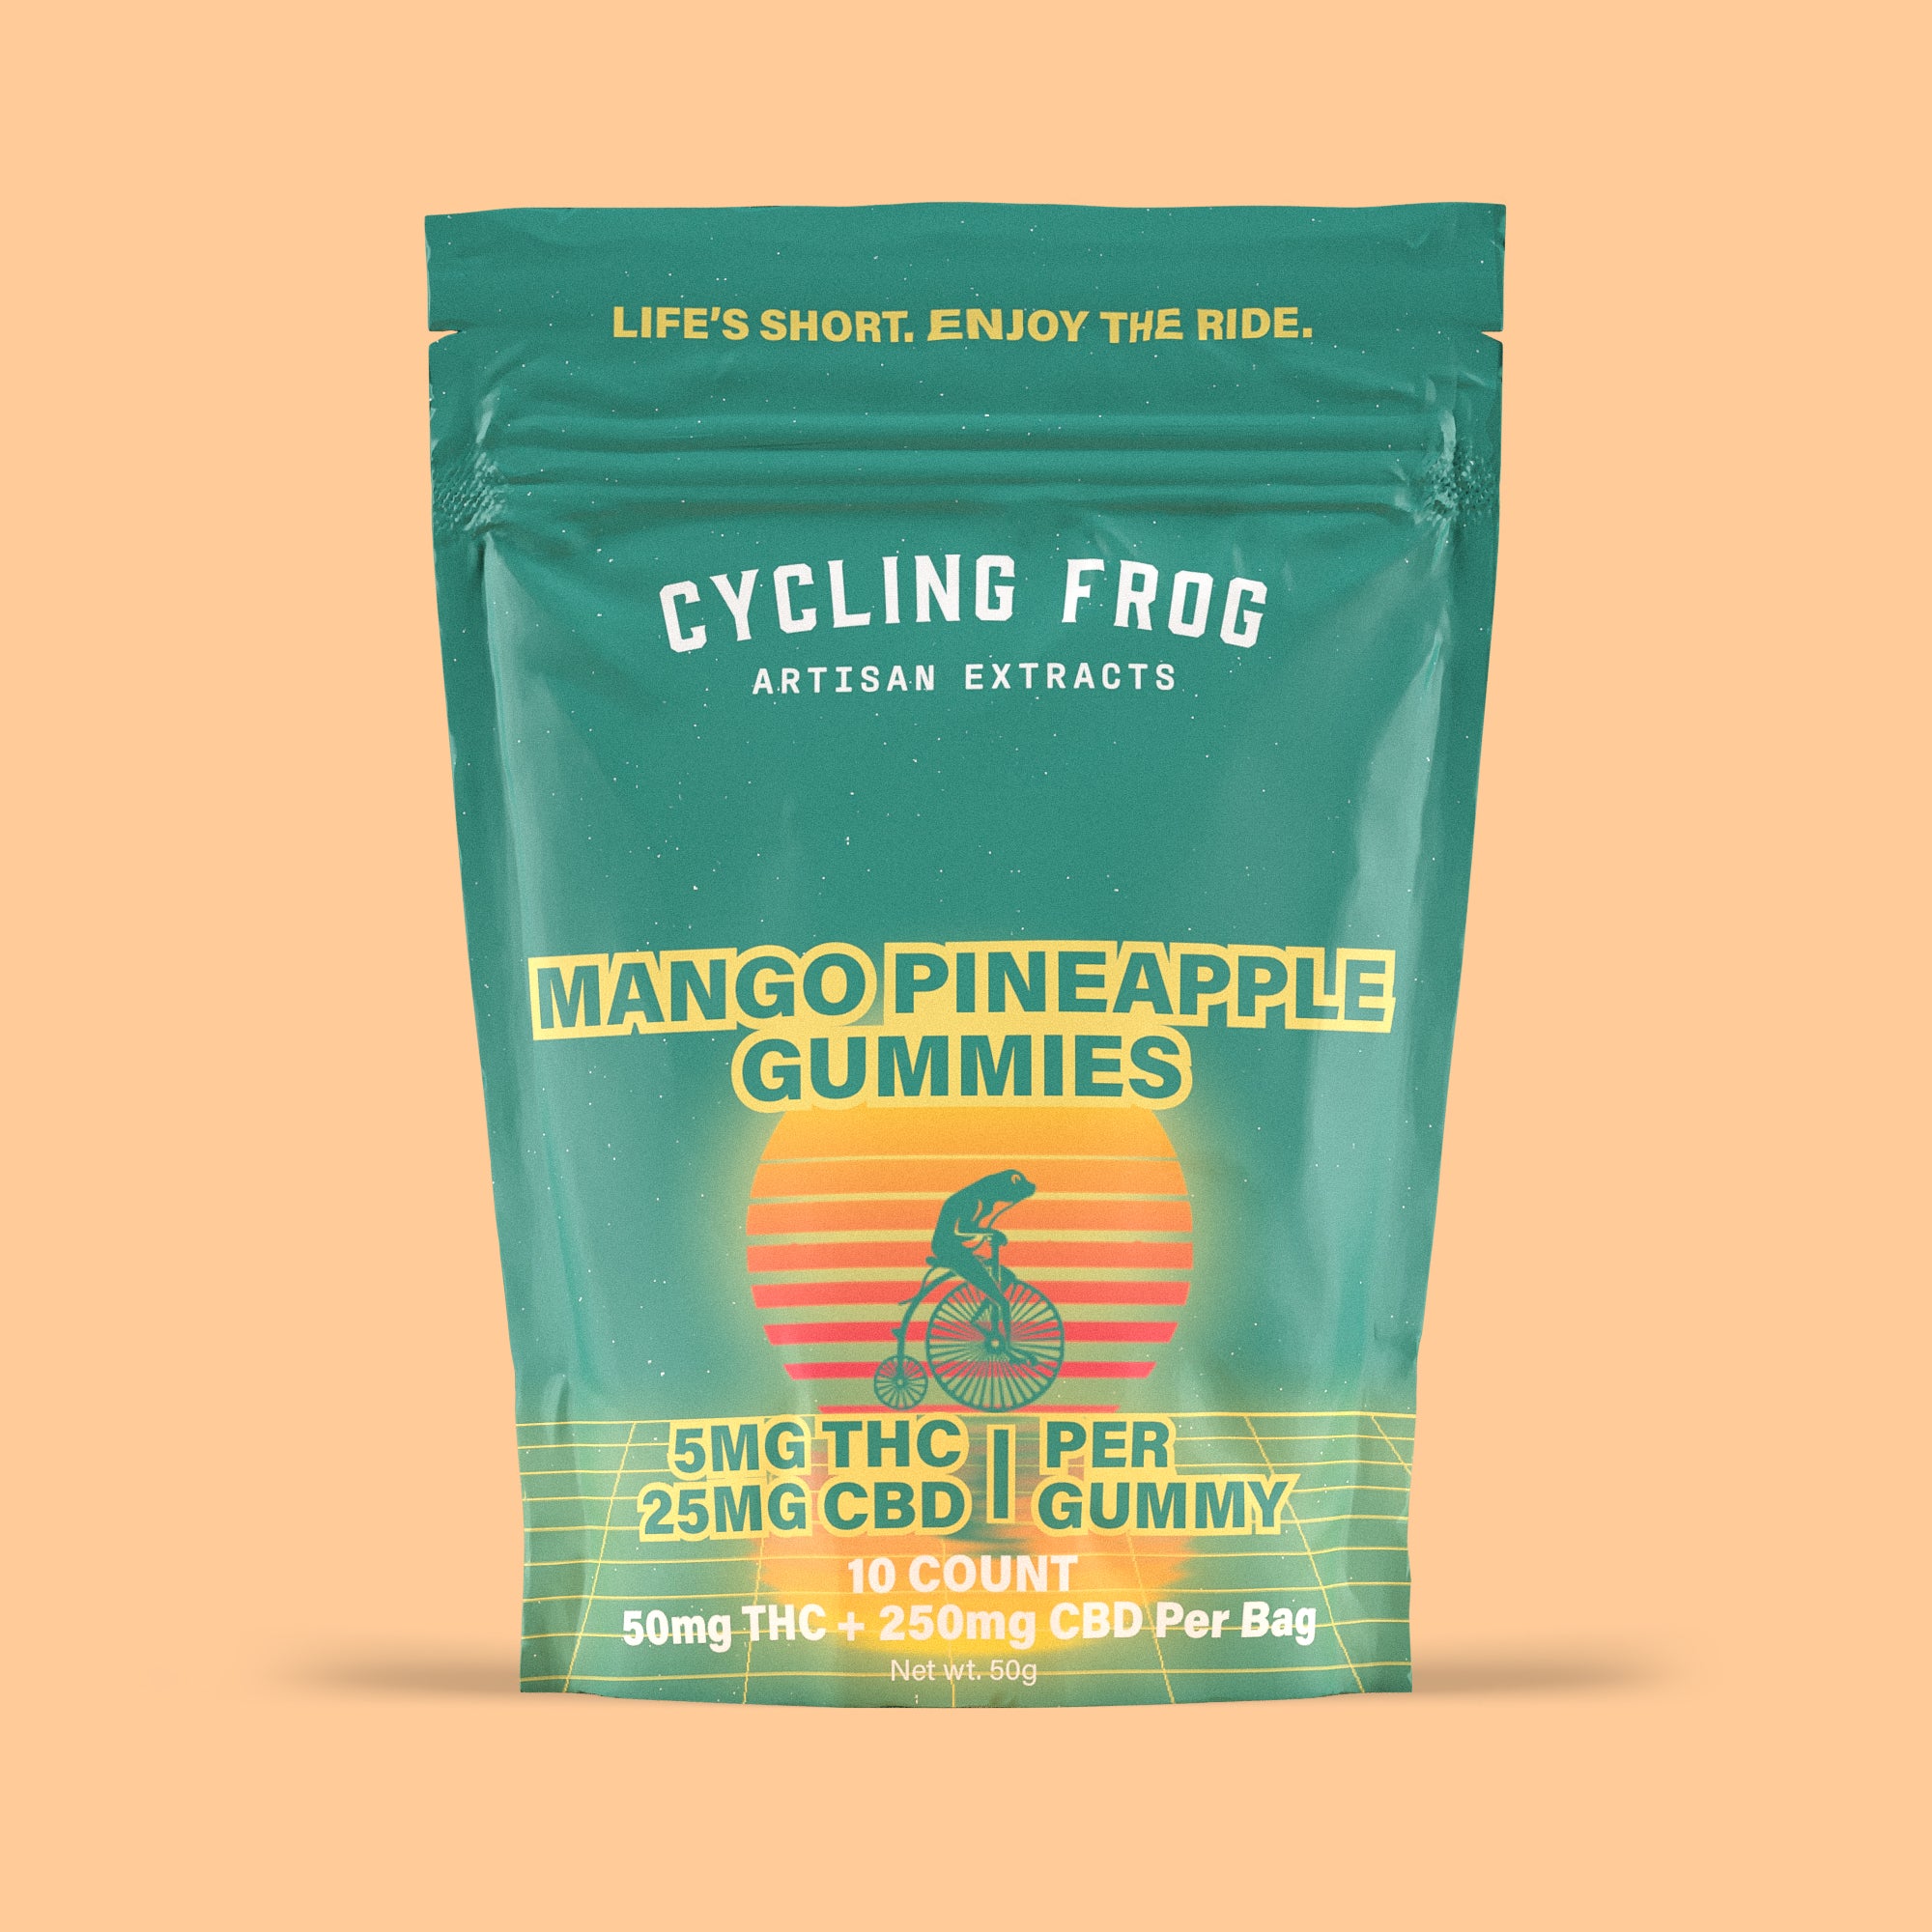 Mango-Pineapple Gummies, 5mg THC + 25mg CBD